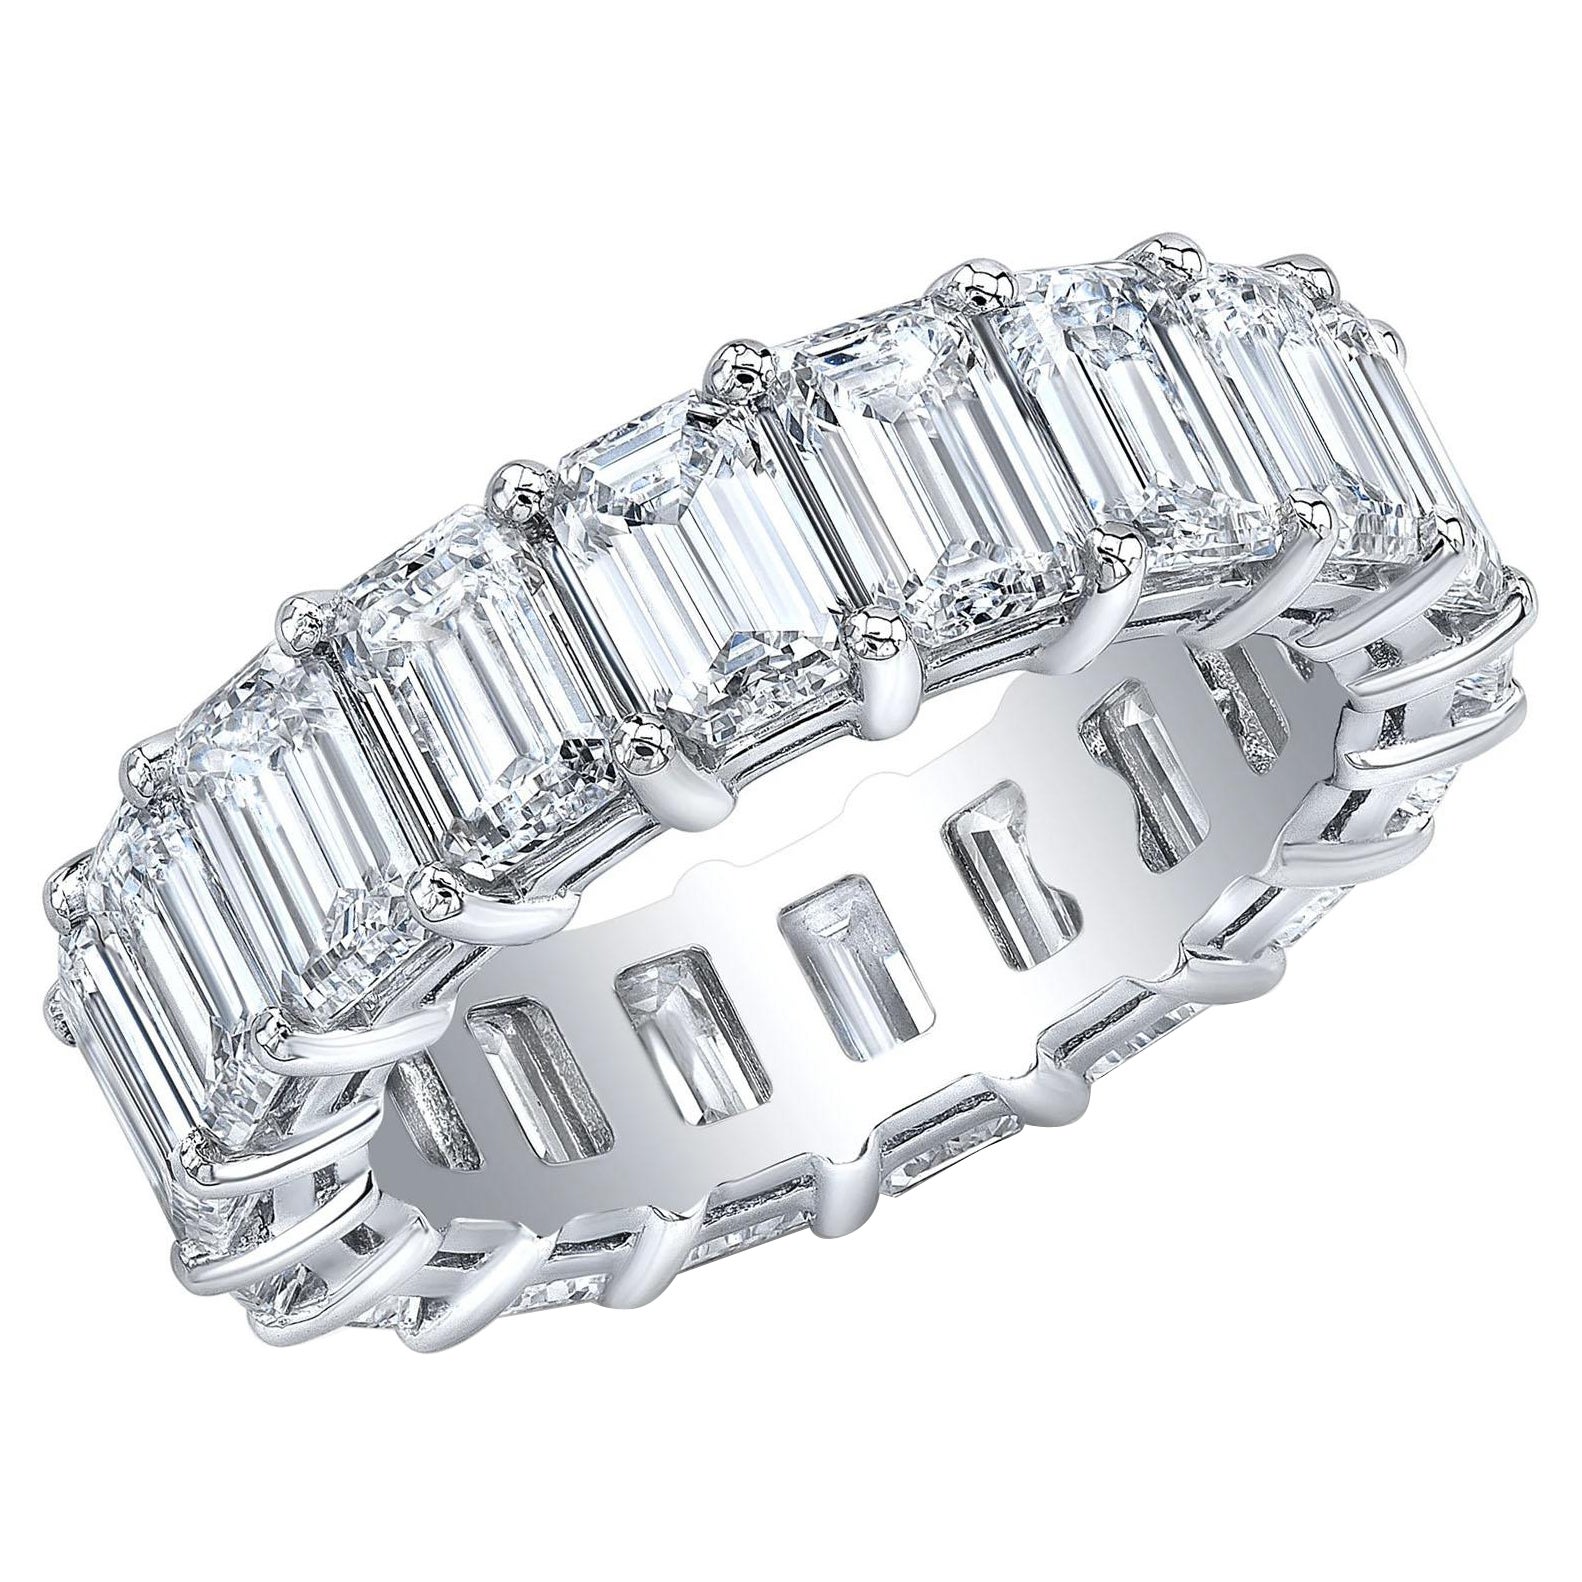 For Sale:  6.00 Carat Emerald Cut Diamond Eternity Ring Gallery Style G-H / VS1 14k Gold